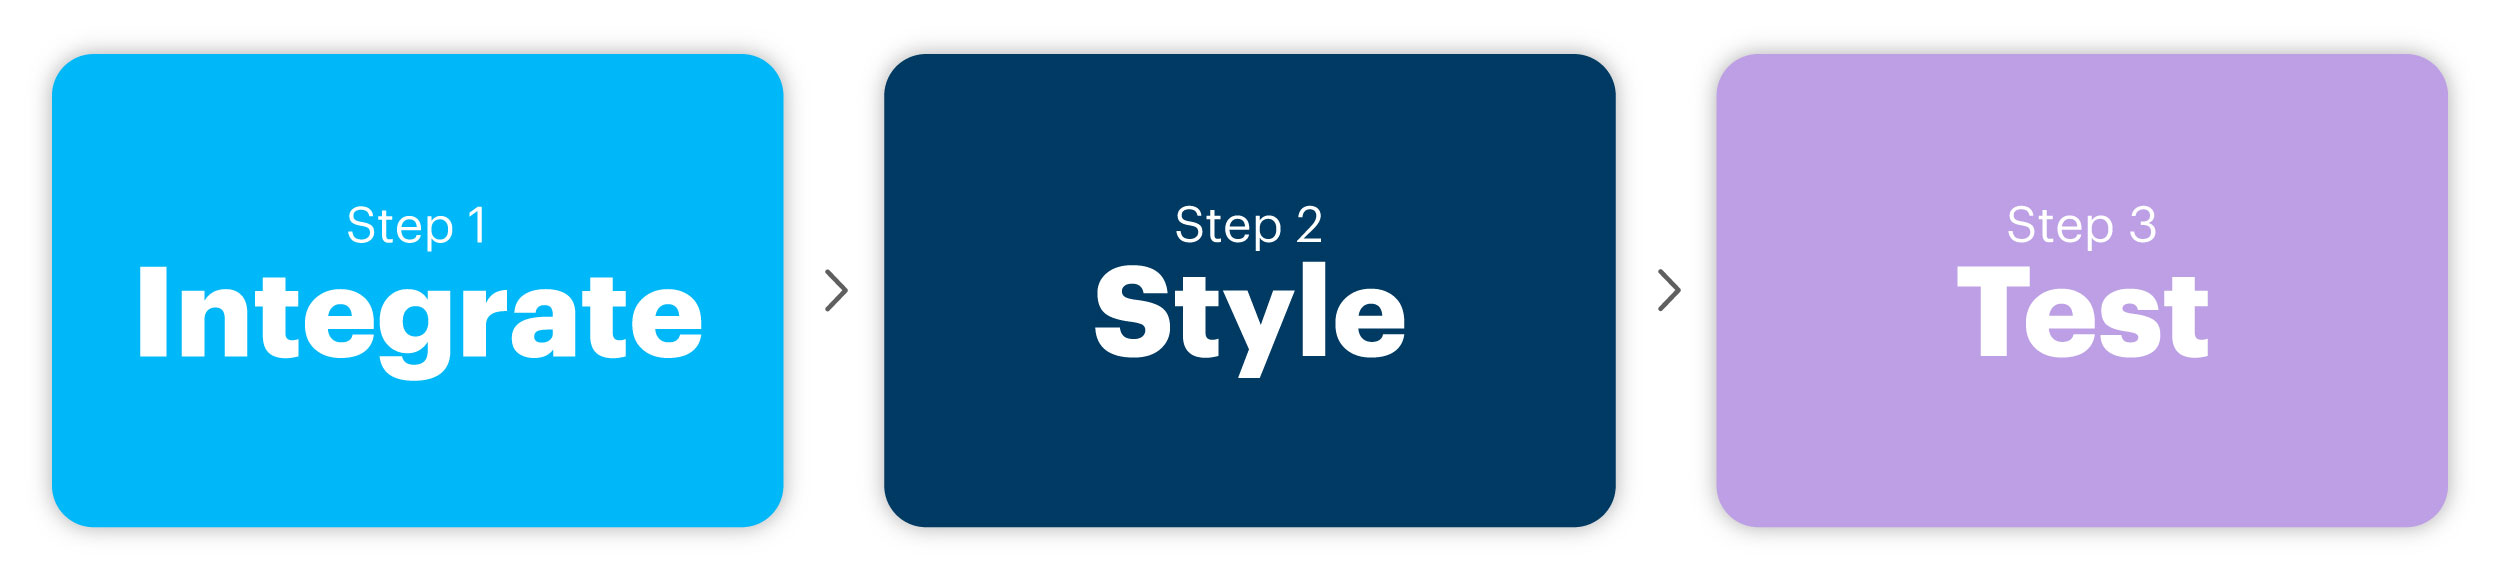 Step 1: Integrate, Step 2: Style, Step 3: Test